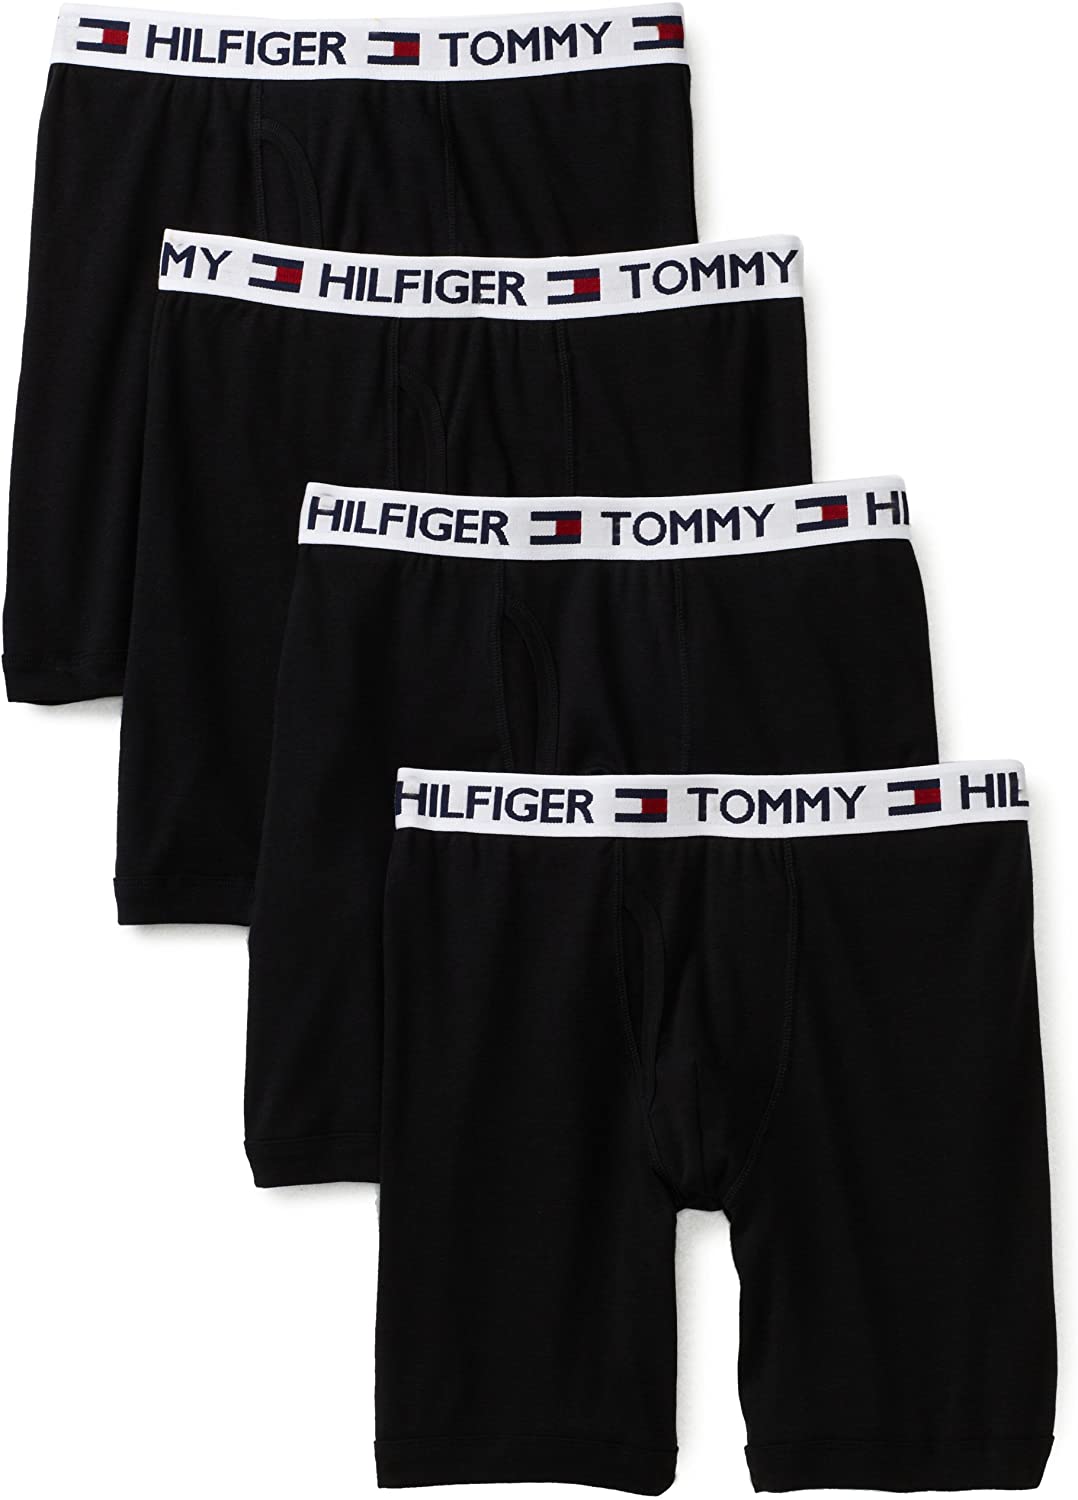 Tommy Hilfiger Mens Boxer Brief 4 Pack